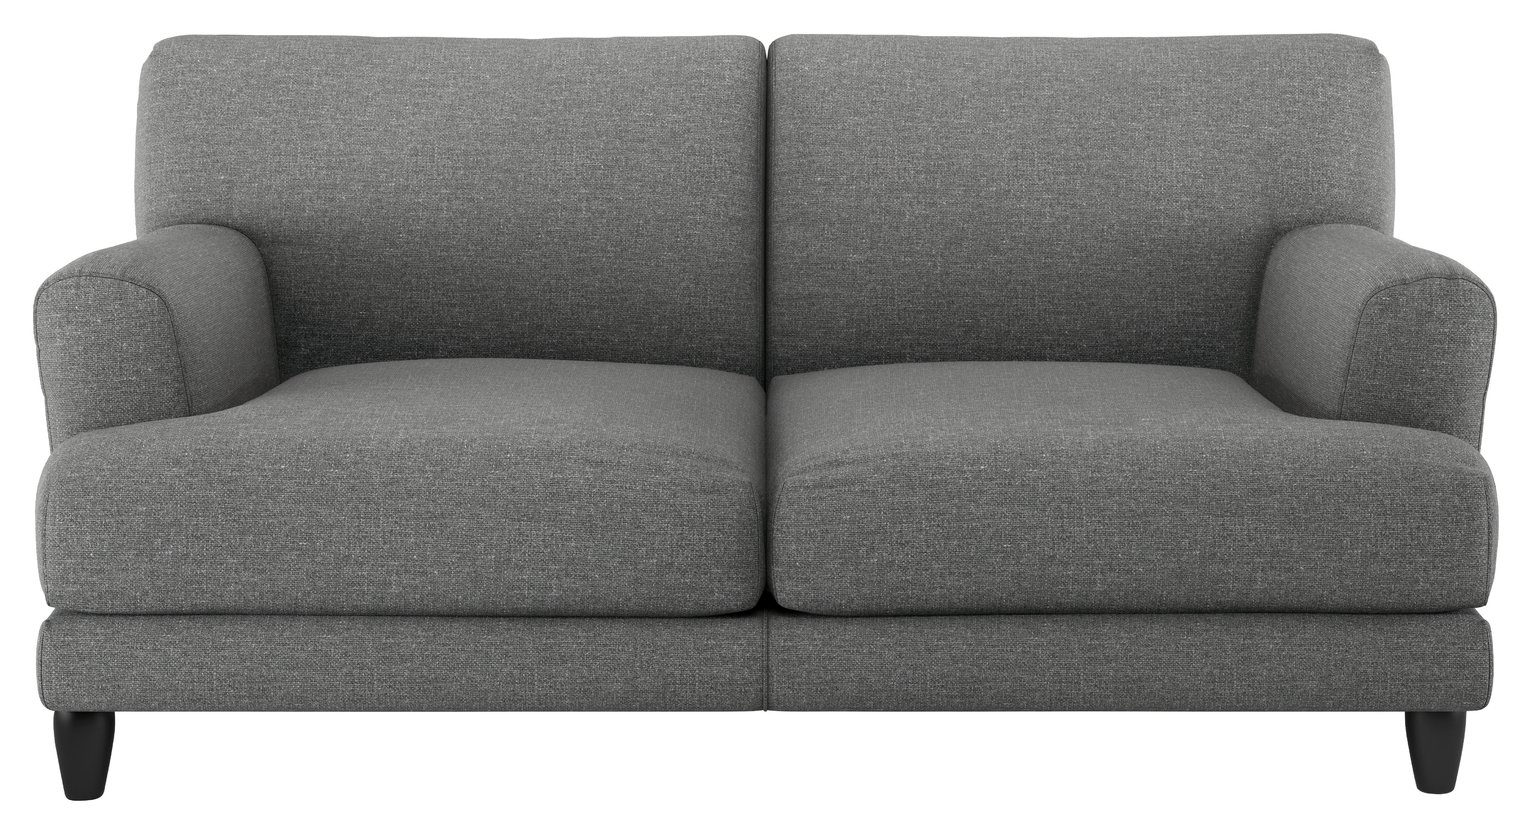 Habitat Askem Fabric 2 Seater Sofa - Grey